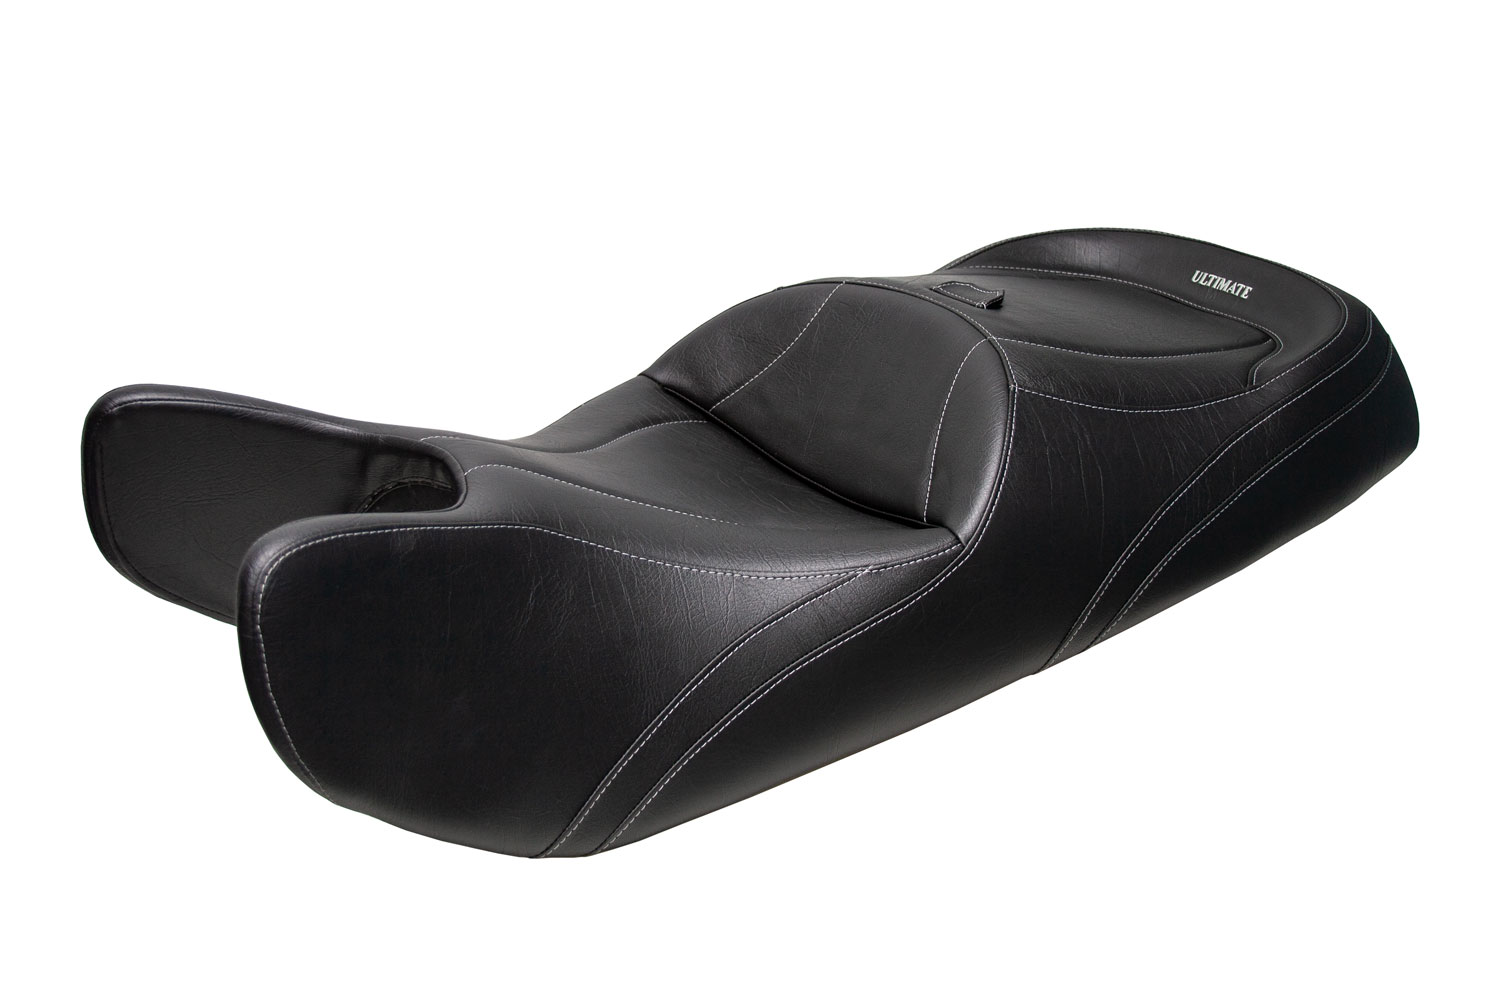 Spyder RT Seat (2010 - 2019)